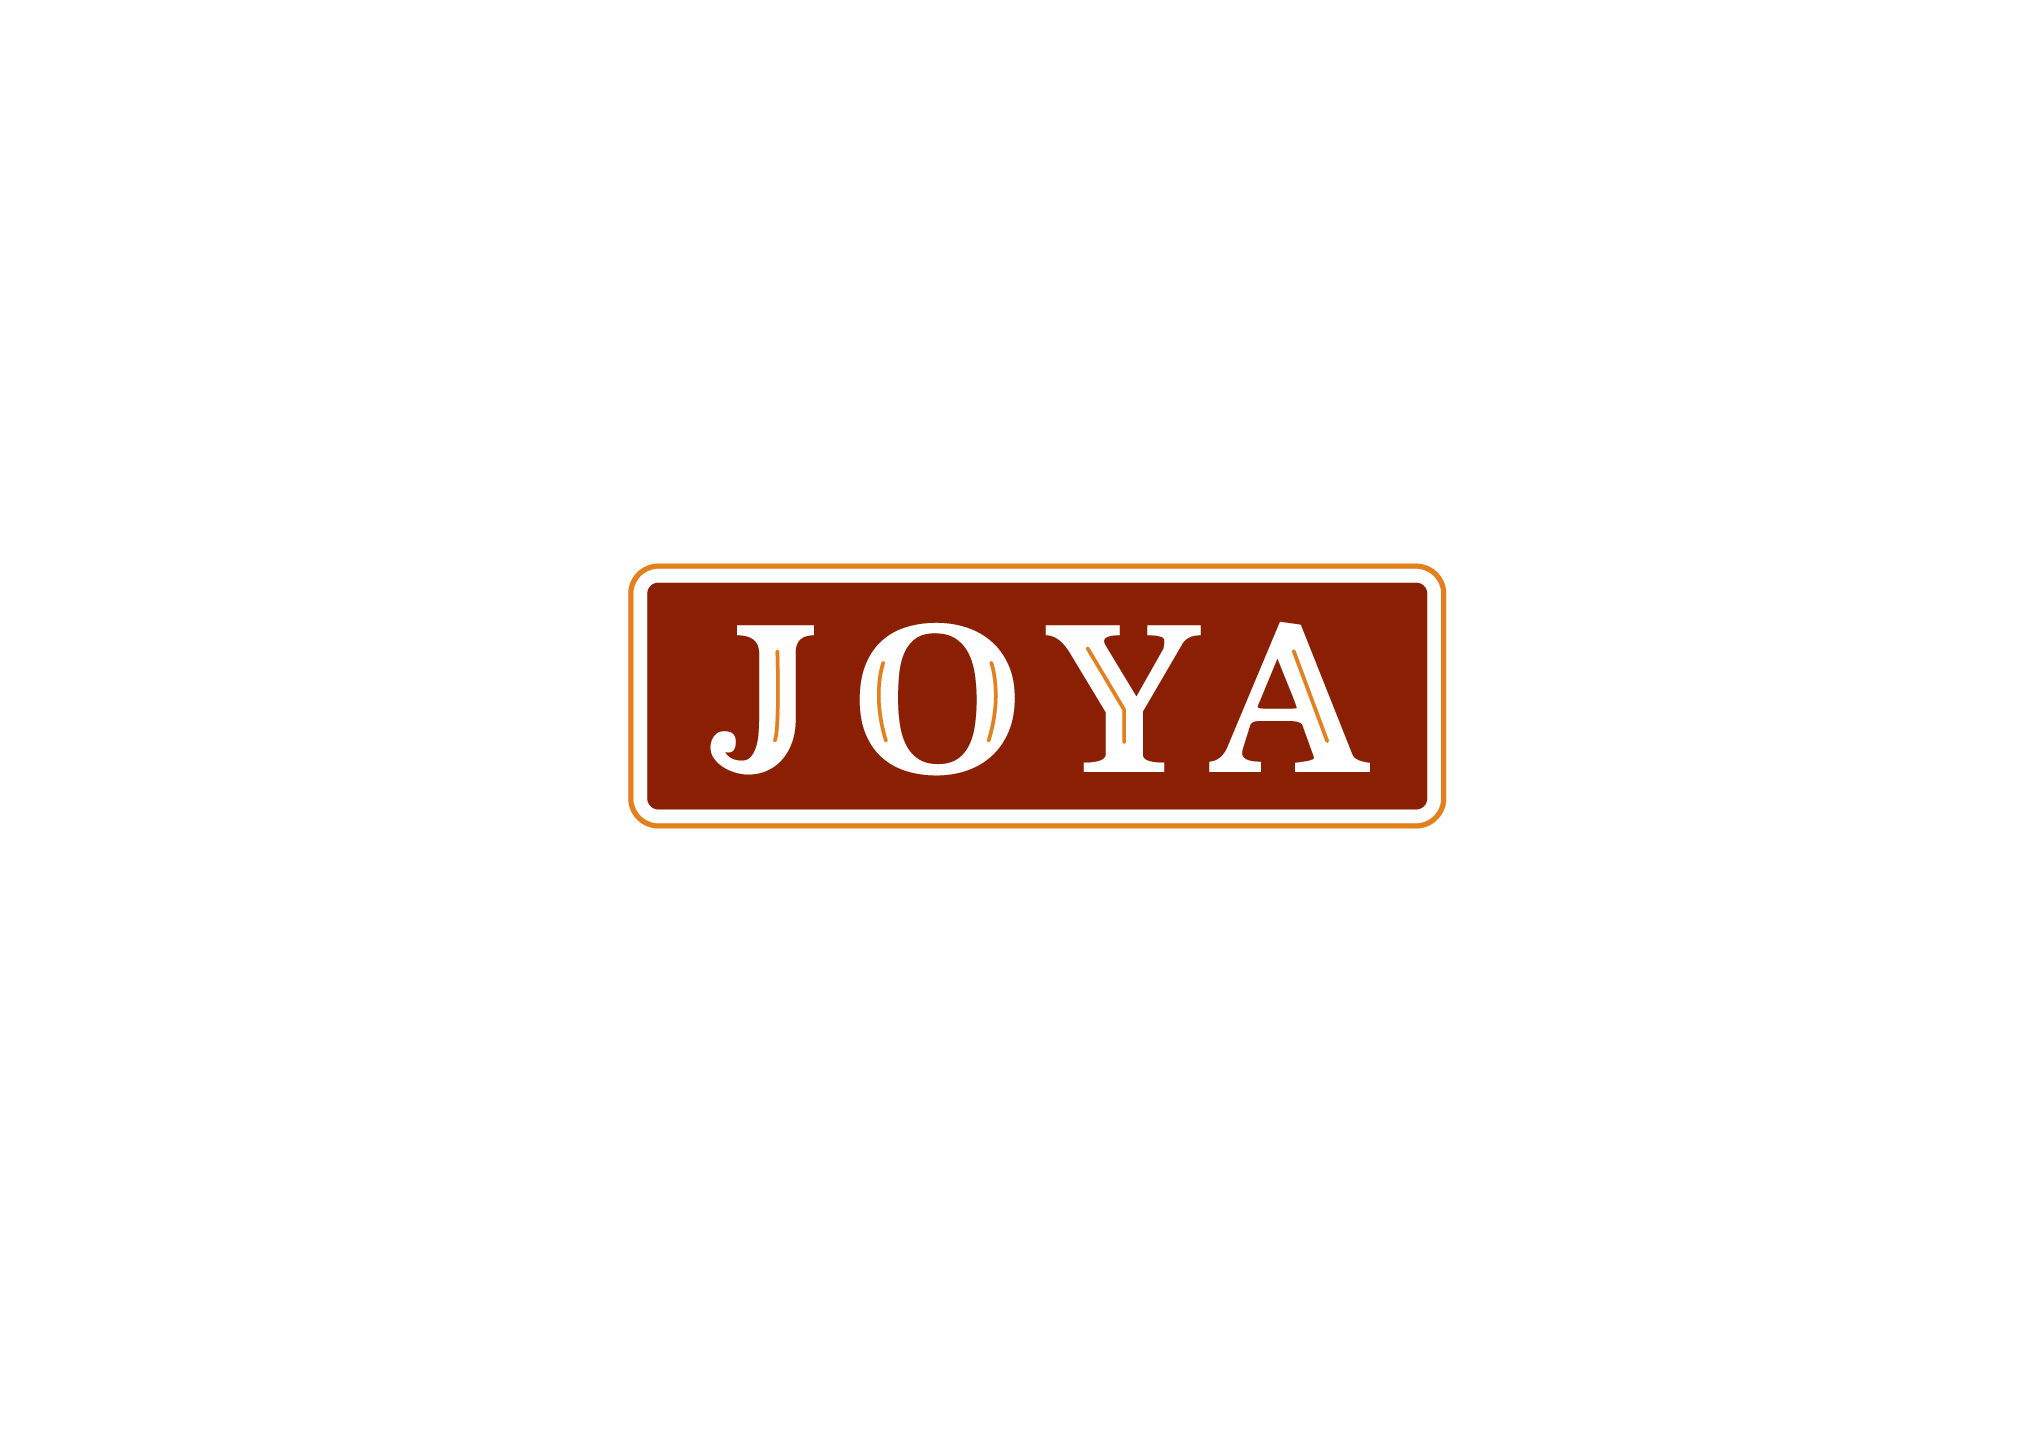 Joya logo on white.png